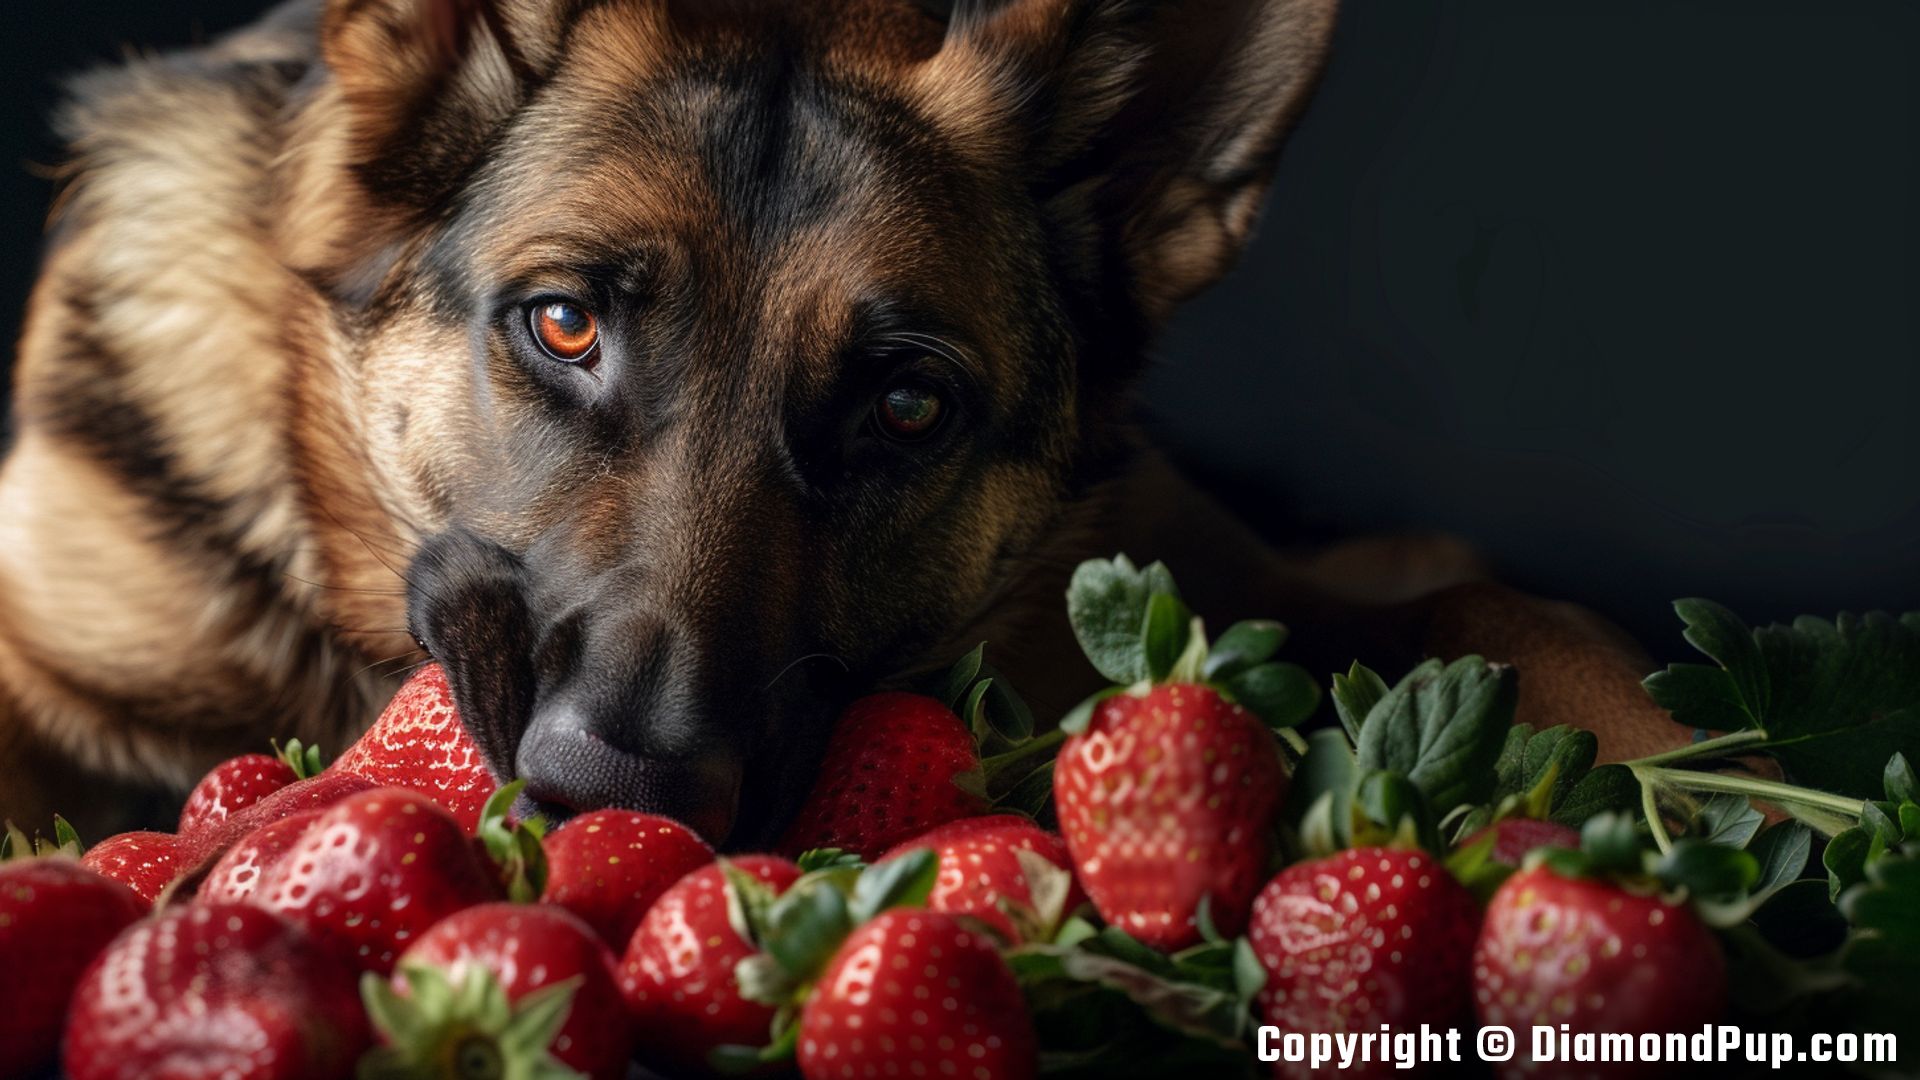 Image of an Adorable German Shepherd Snacking on Strawberries